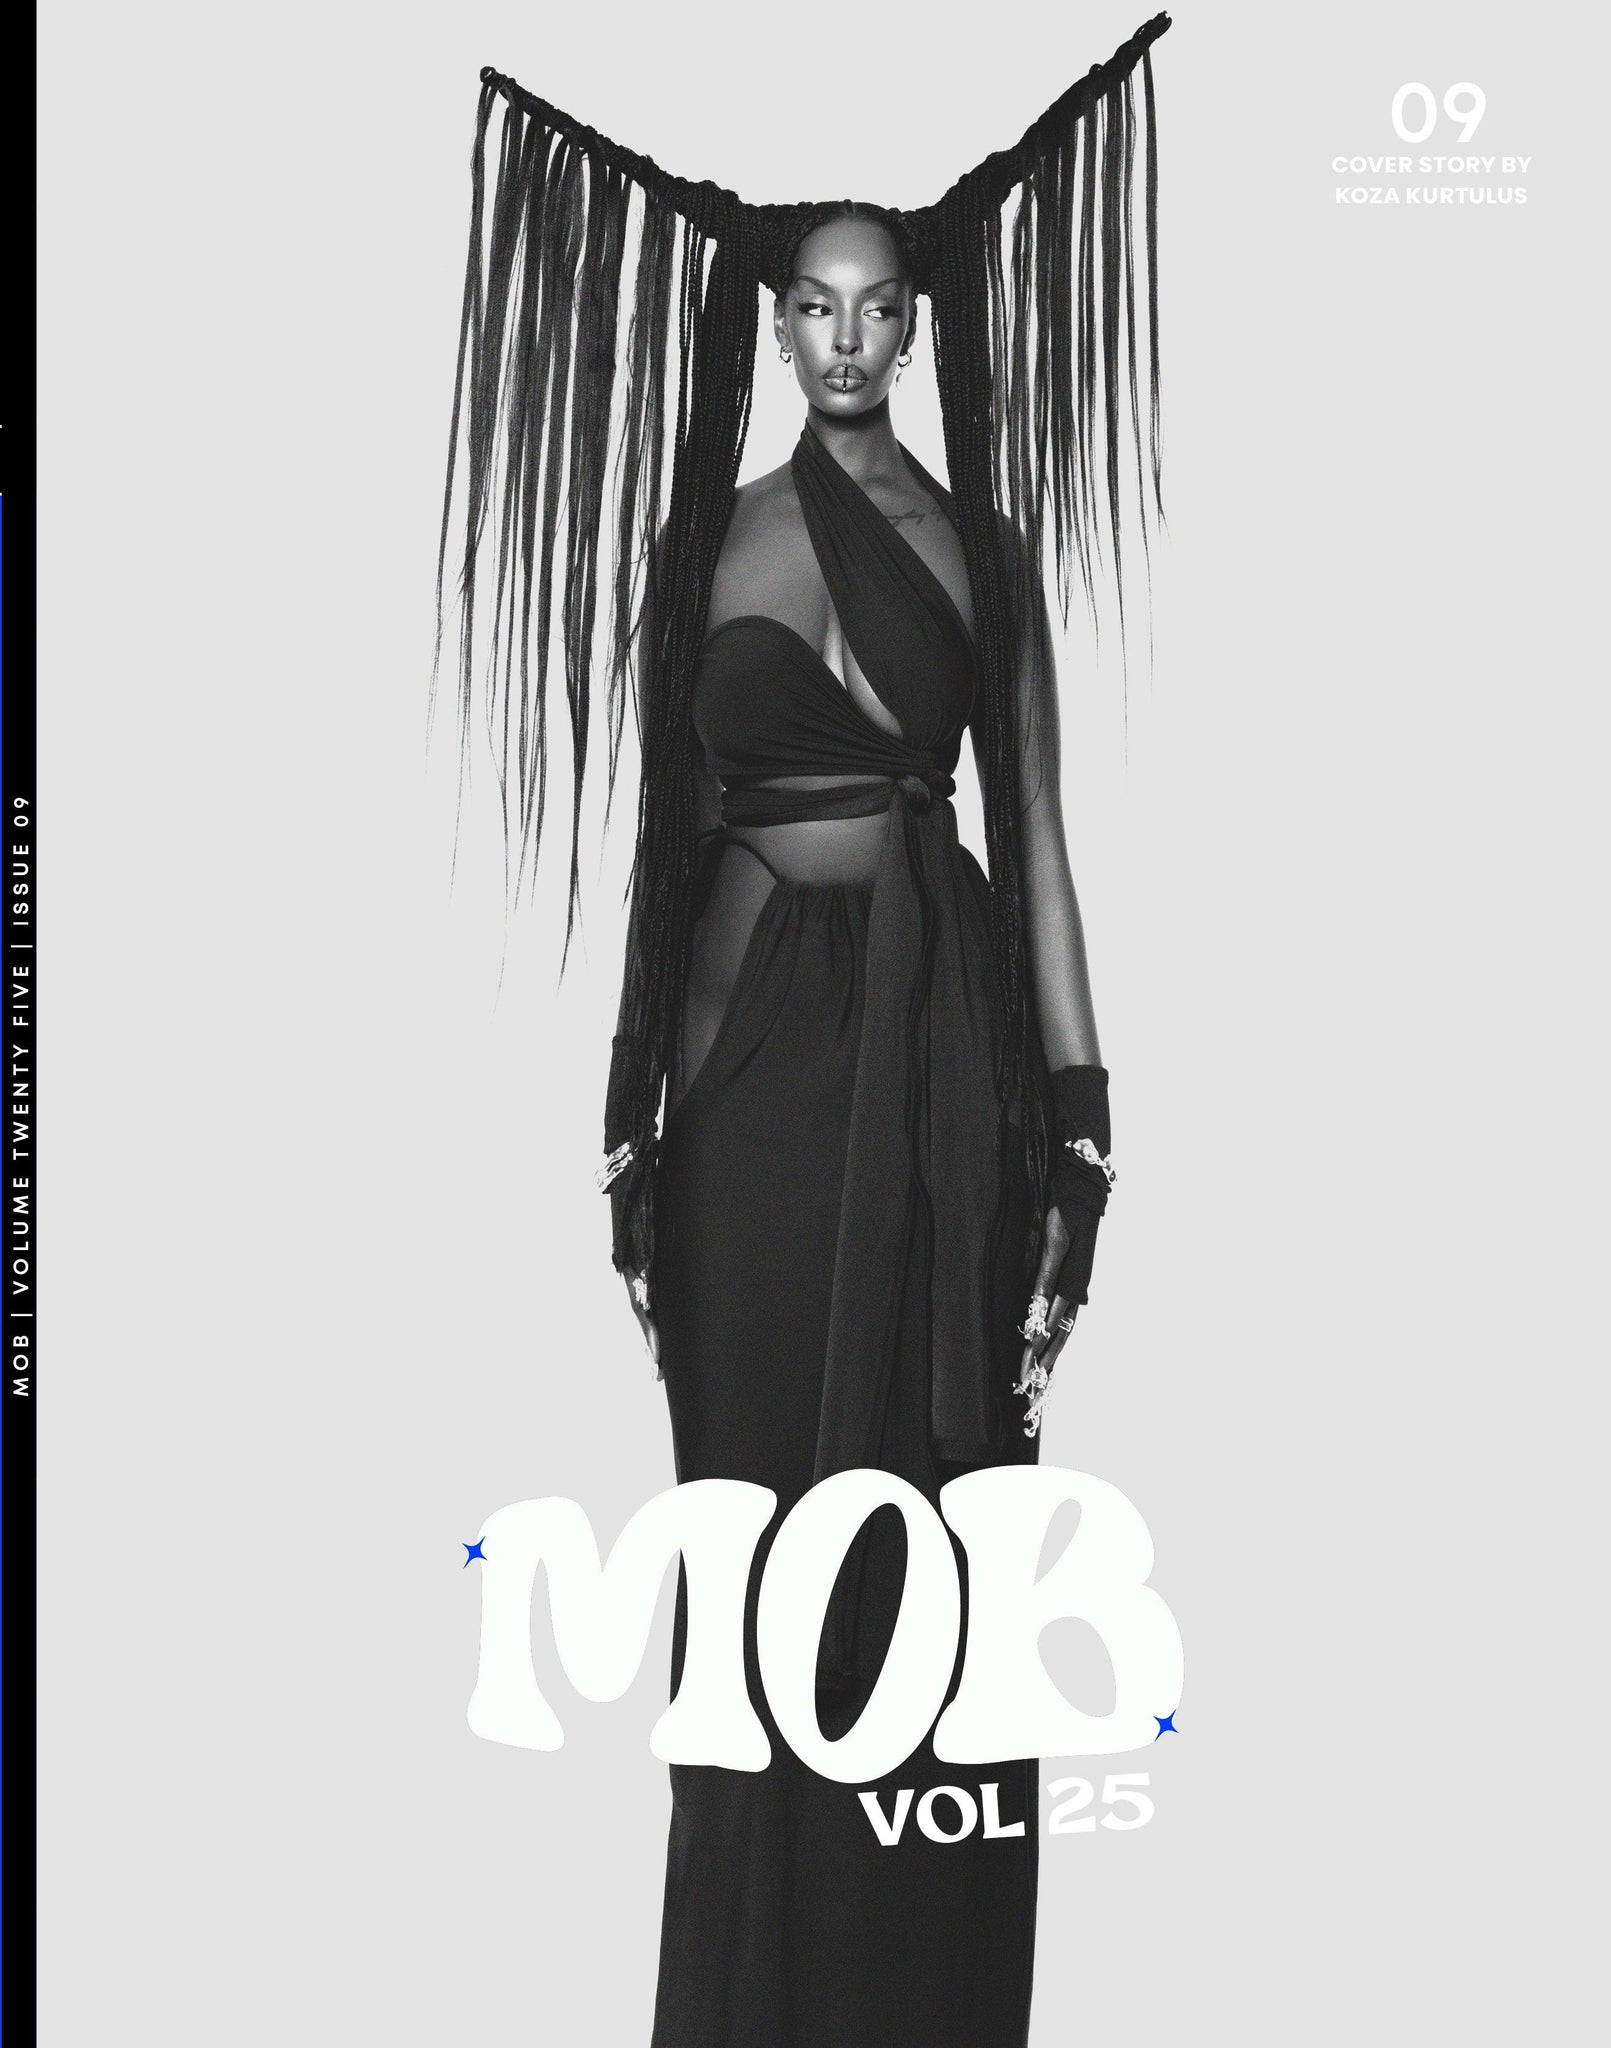 MOB JOURNAL | VOLUME TWENTY FIVE | ISSUE #09 - Mob Journal